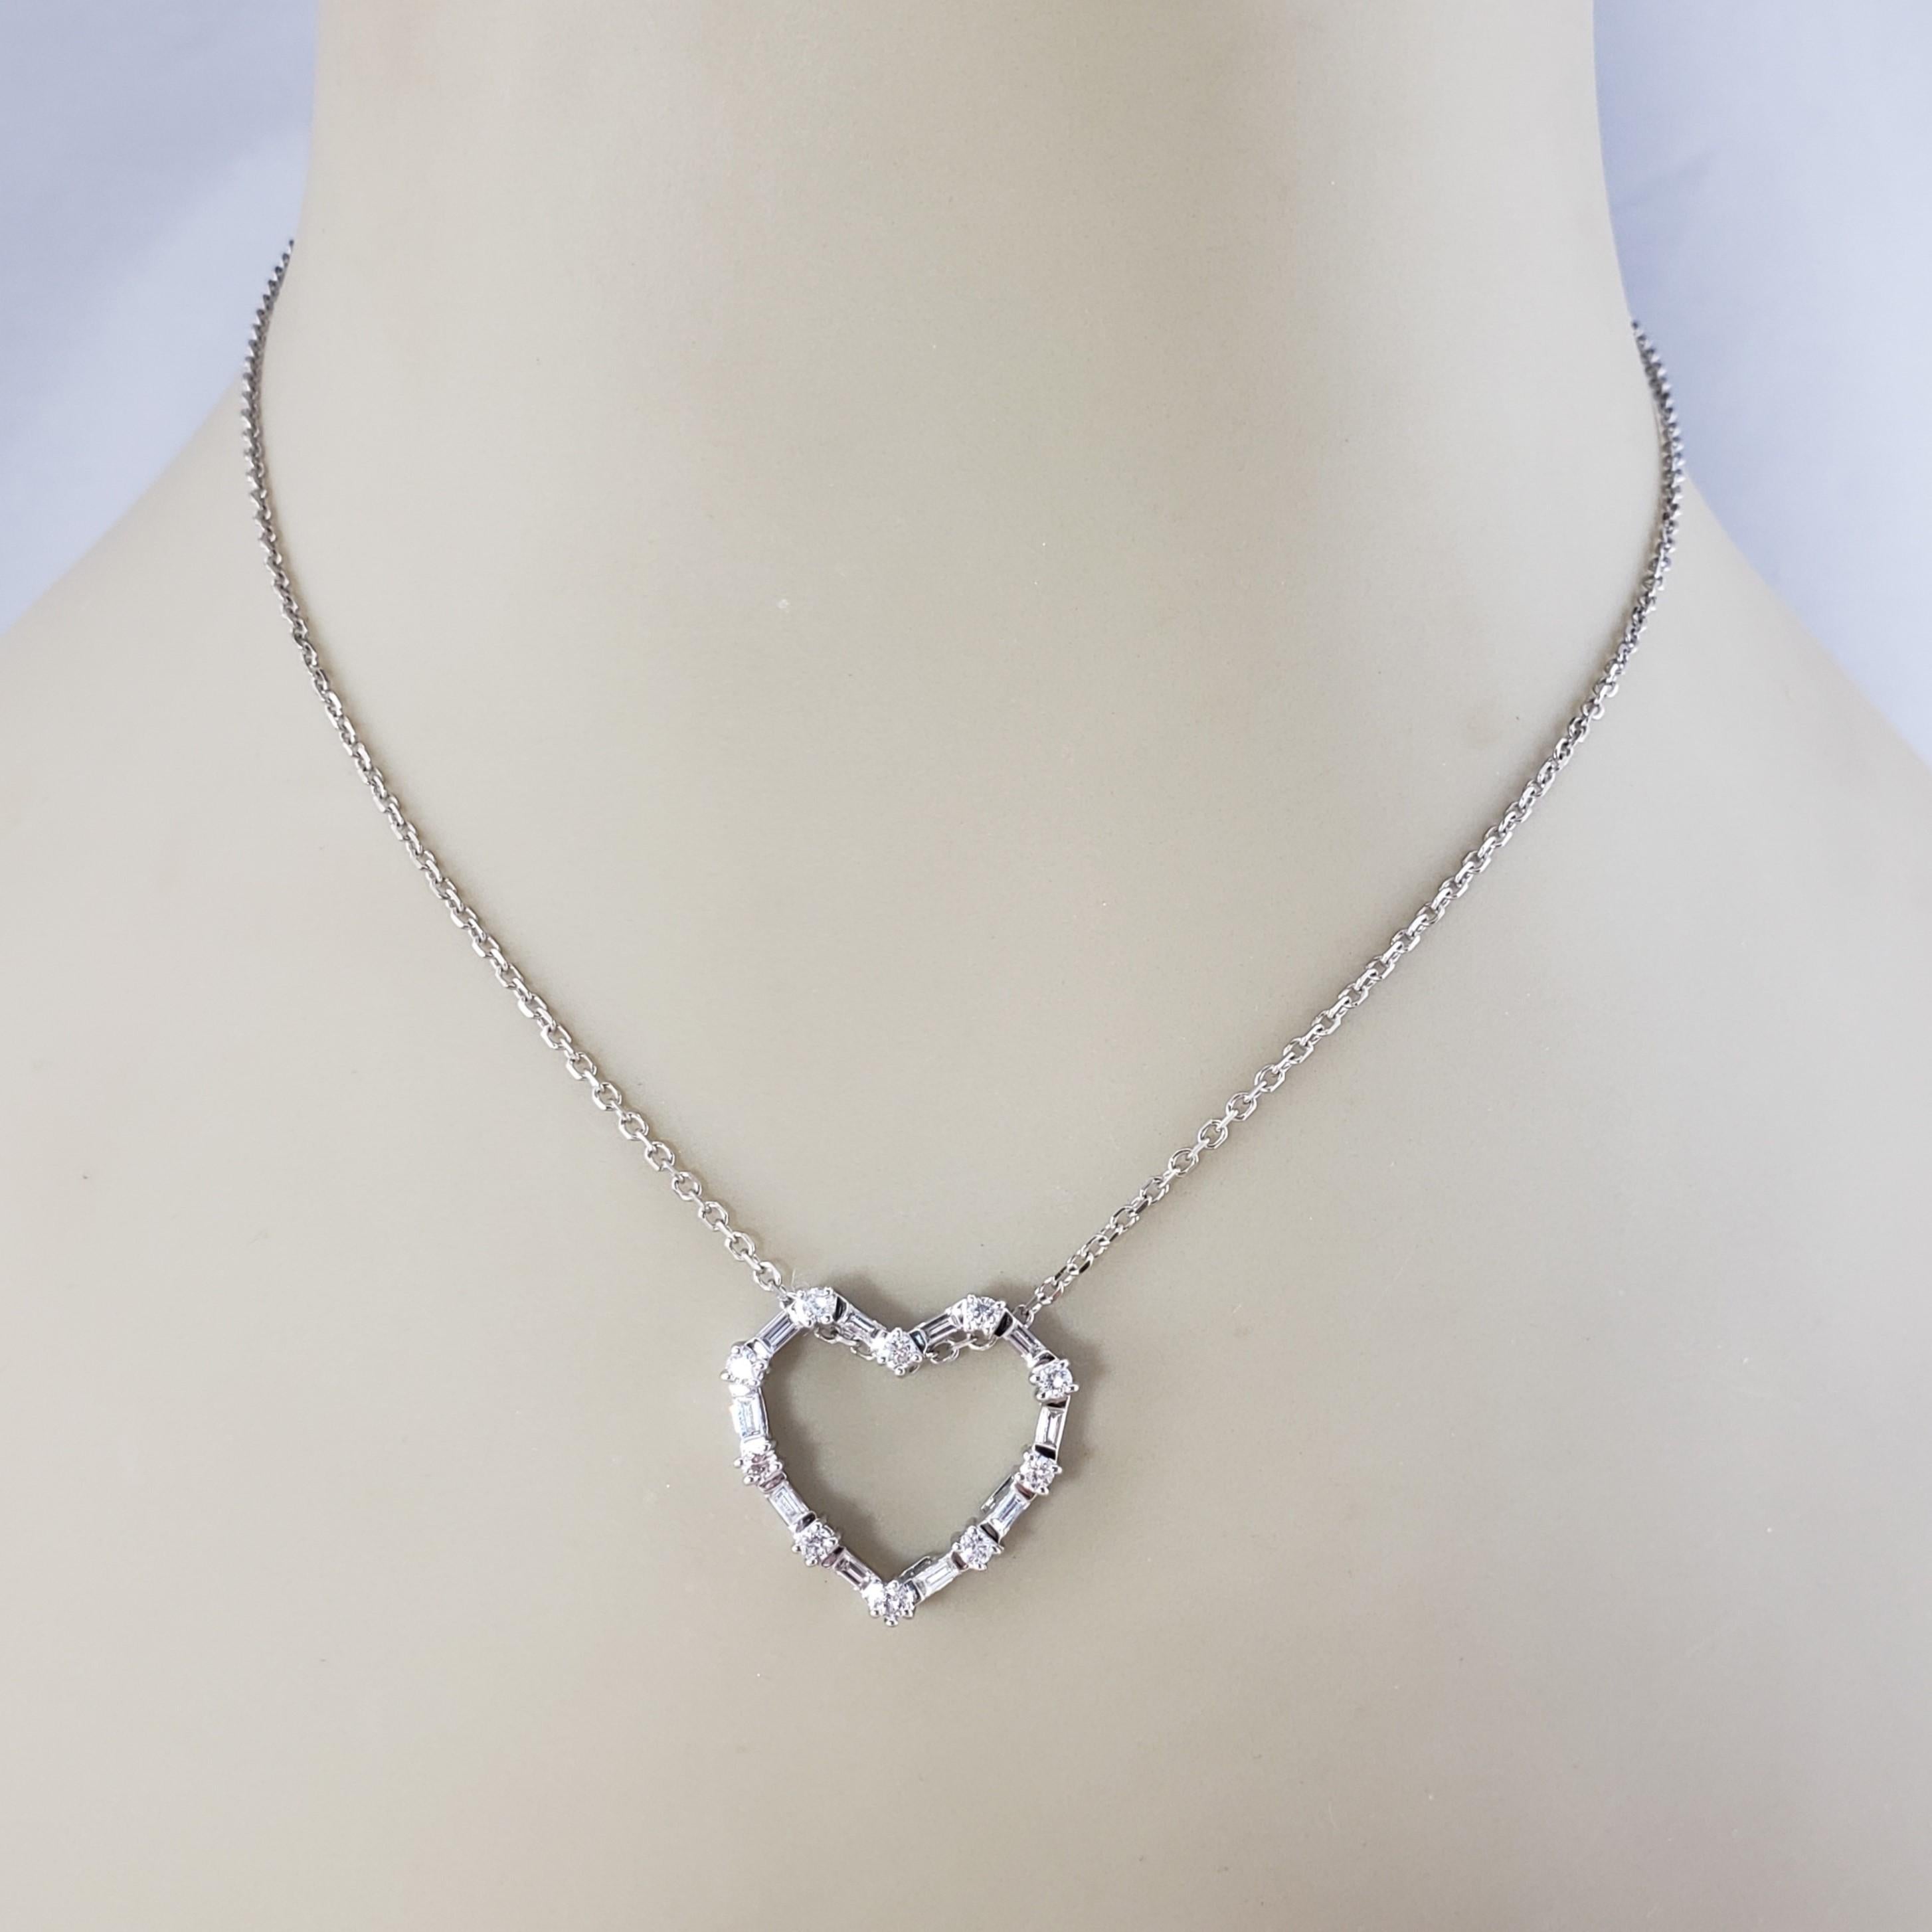  14/18 Karat White Gold Diamond Heart Pendant Necklace #15574 For Sale 2